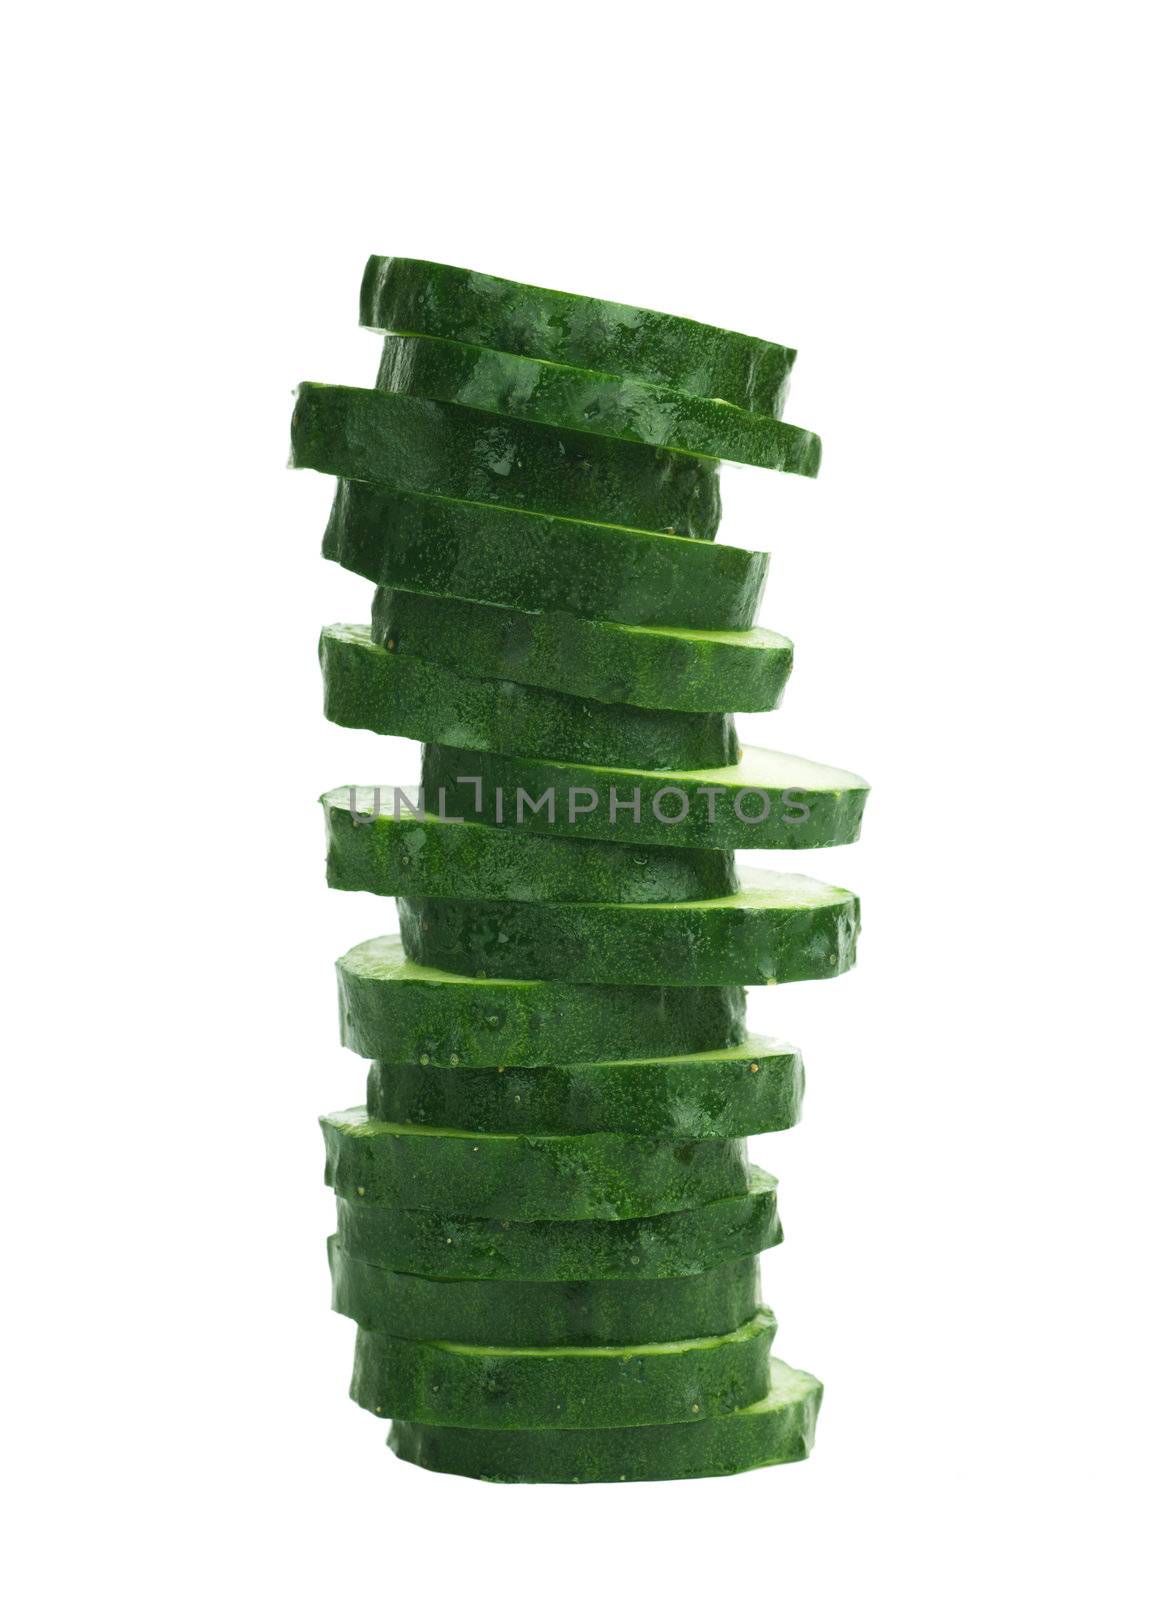 Macro view of cucumber slices